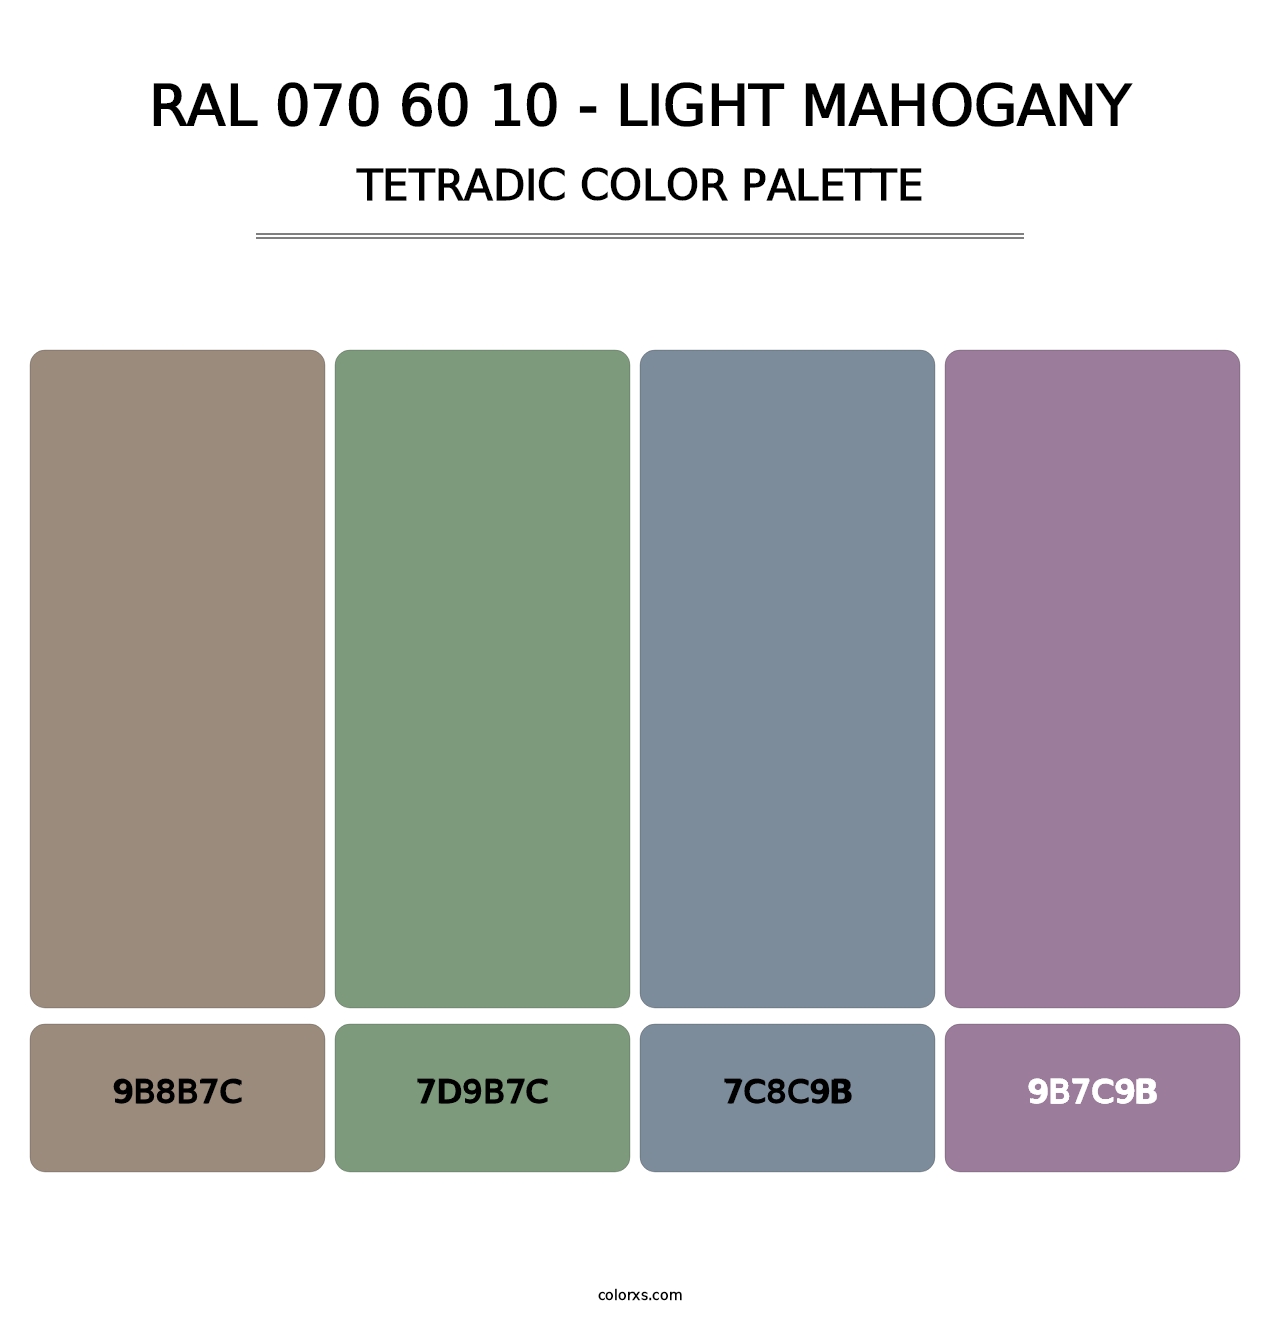 RAL 070 60 10 - Light Mahogany - Tetradic Color Palette